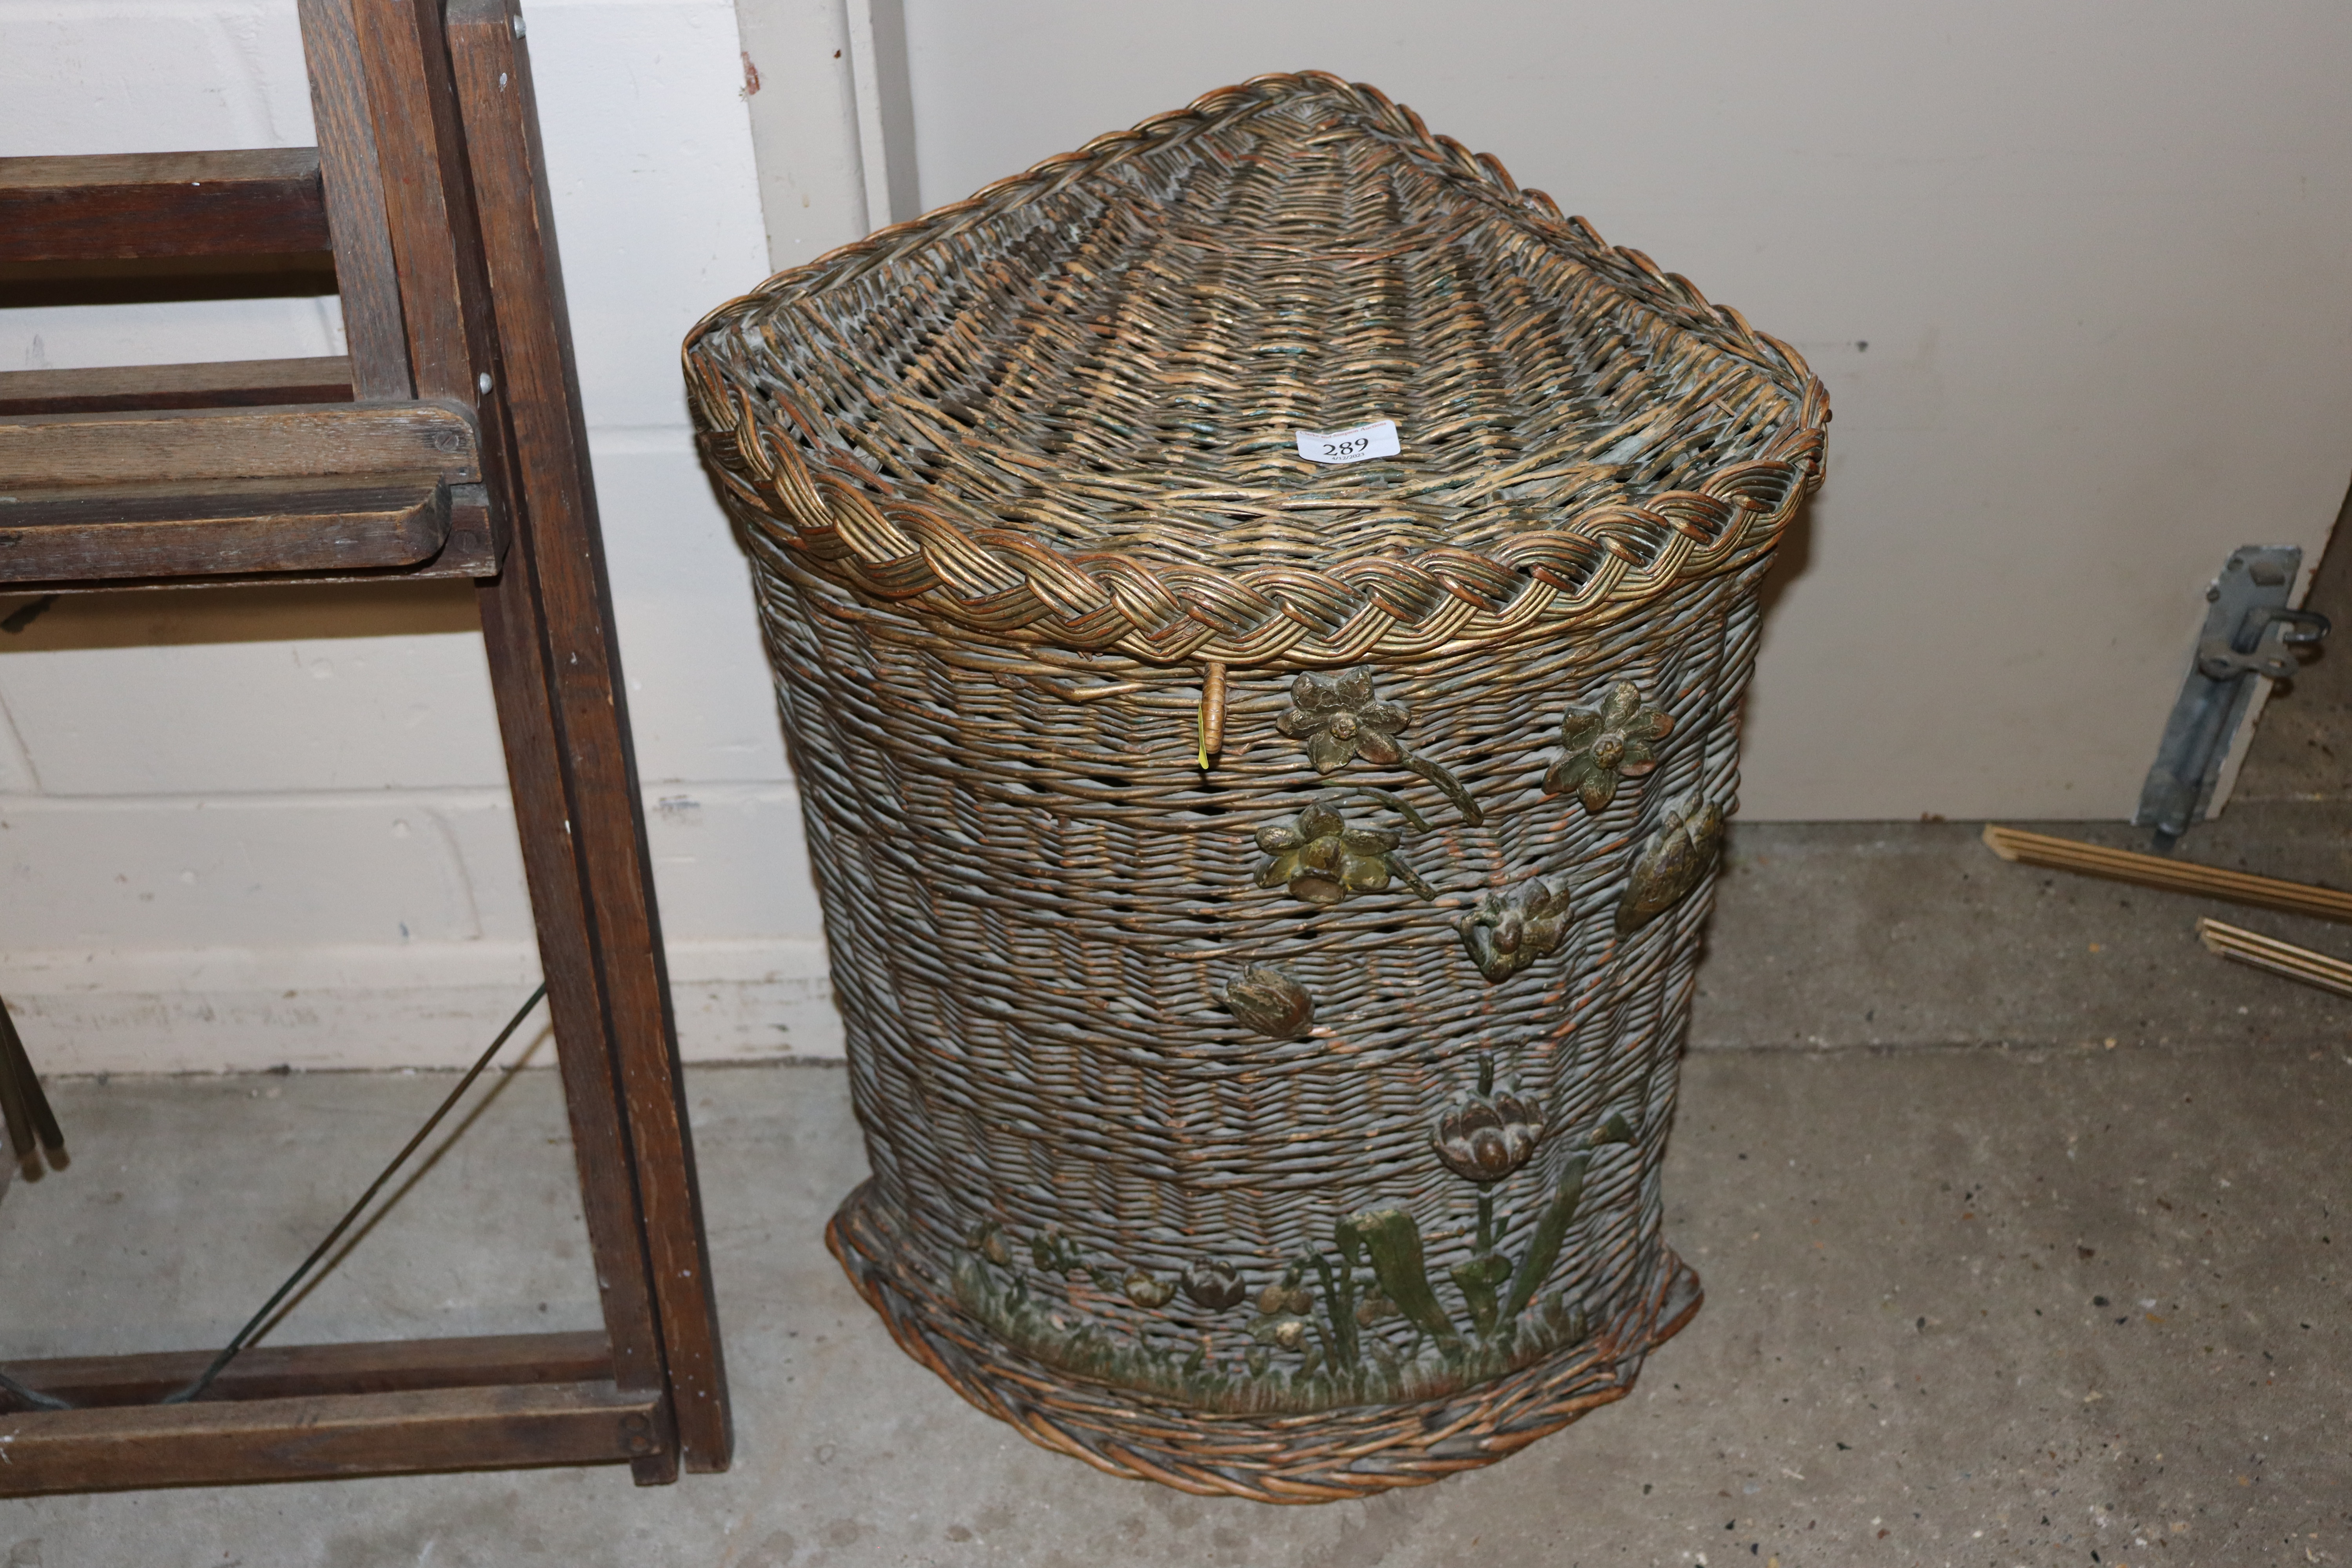 A wicker corner basket with applied carved wood de